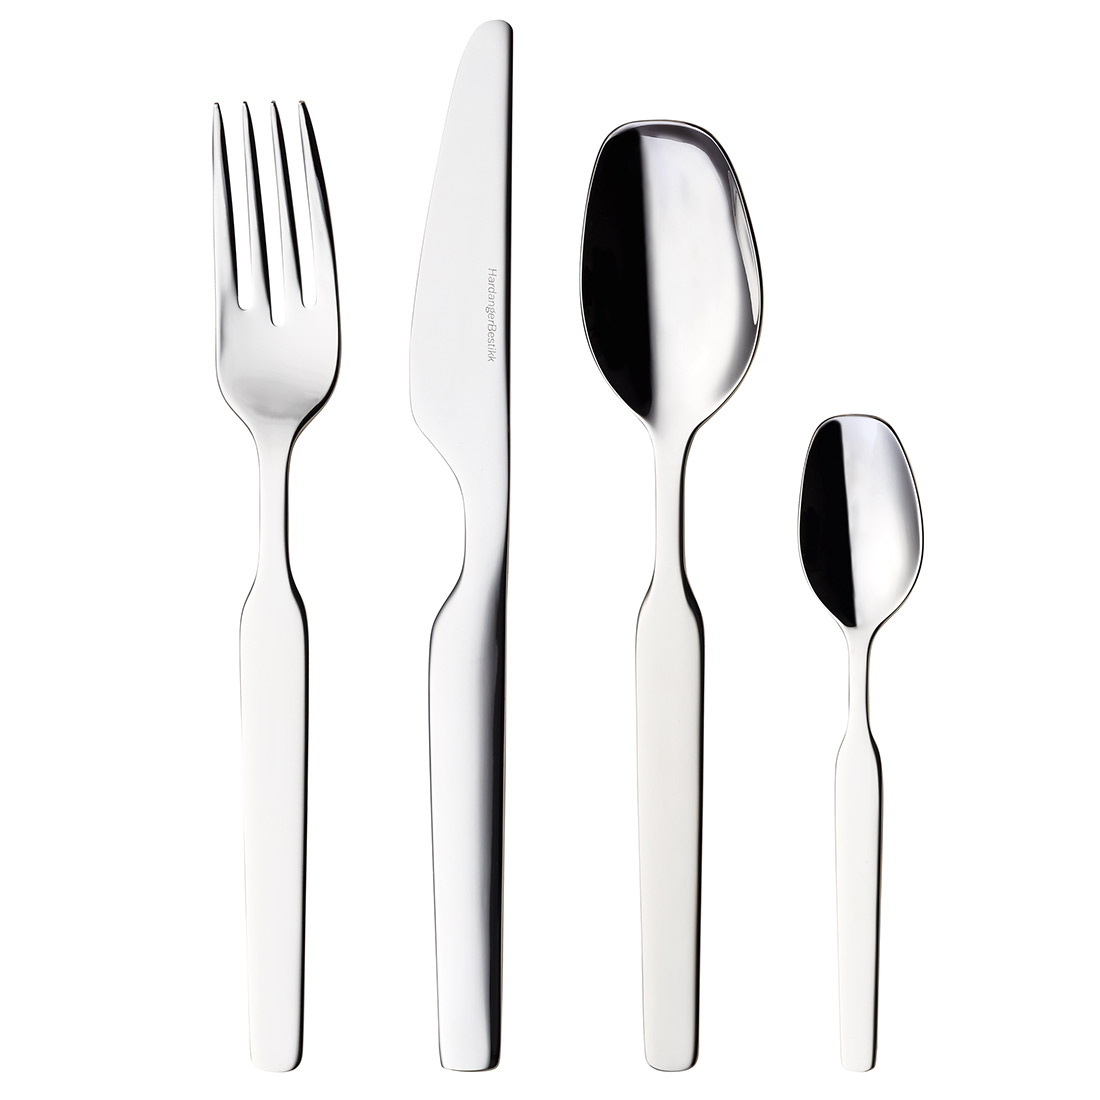 Malin cutlery set product image